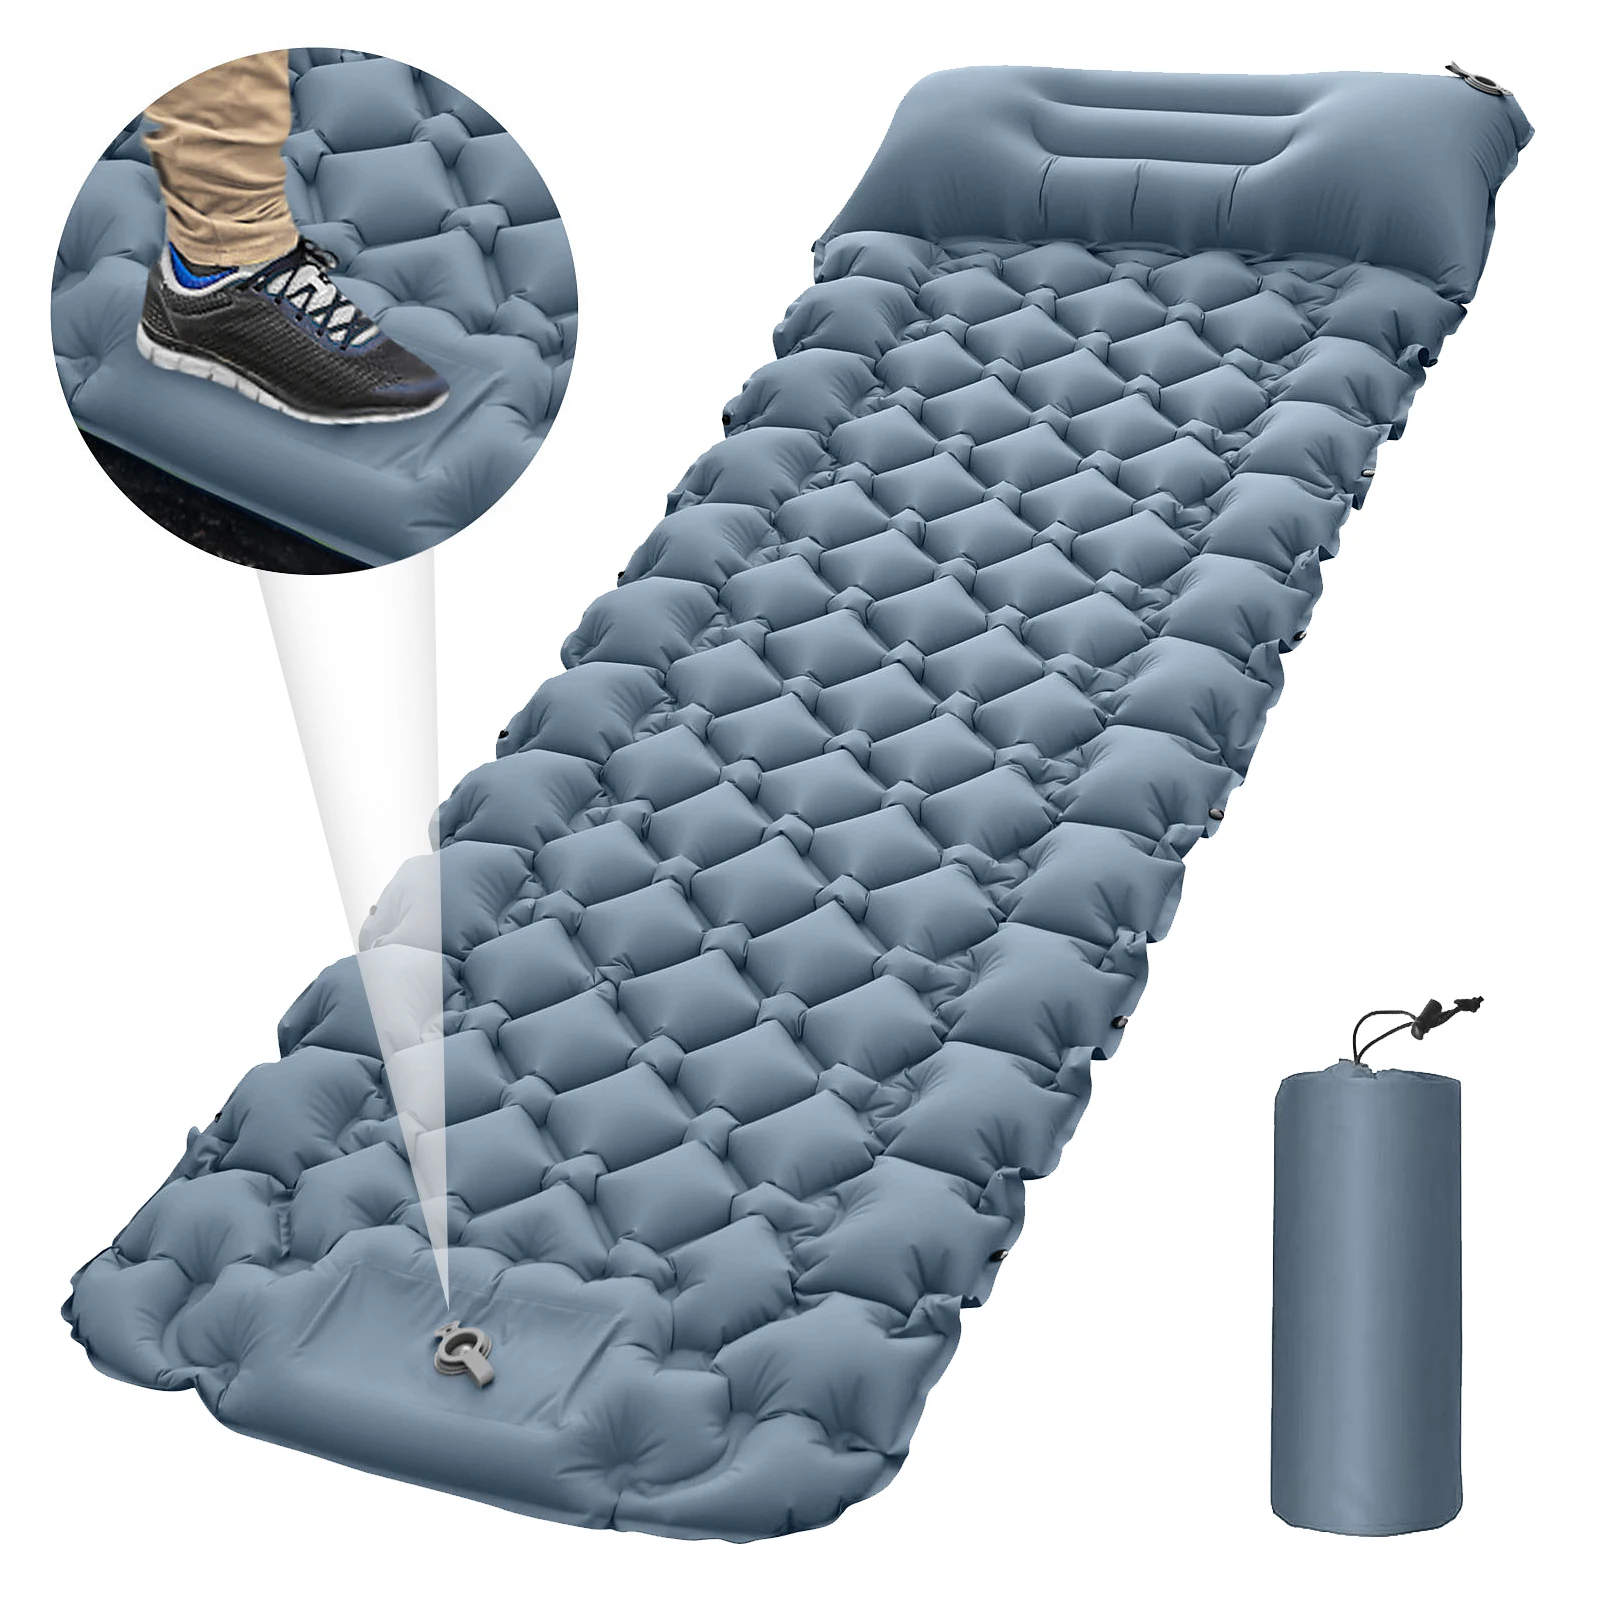 

Outdoor Sleeping Pad Camping Inflatable Mattress with Air Pillows Travel Mat Folding Bed Ultralight Air Cushion Hiking Trekking